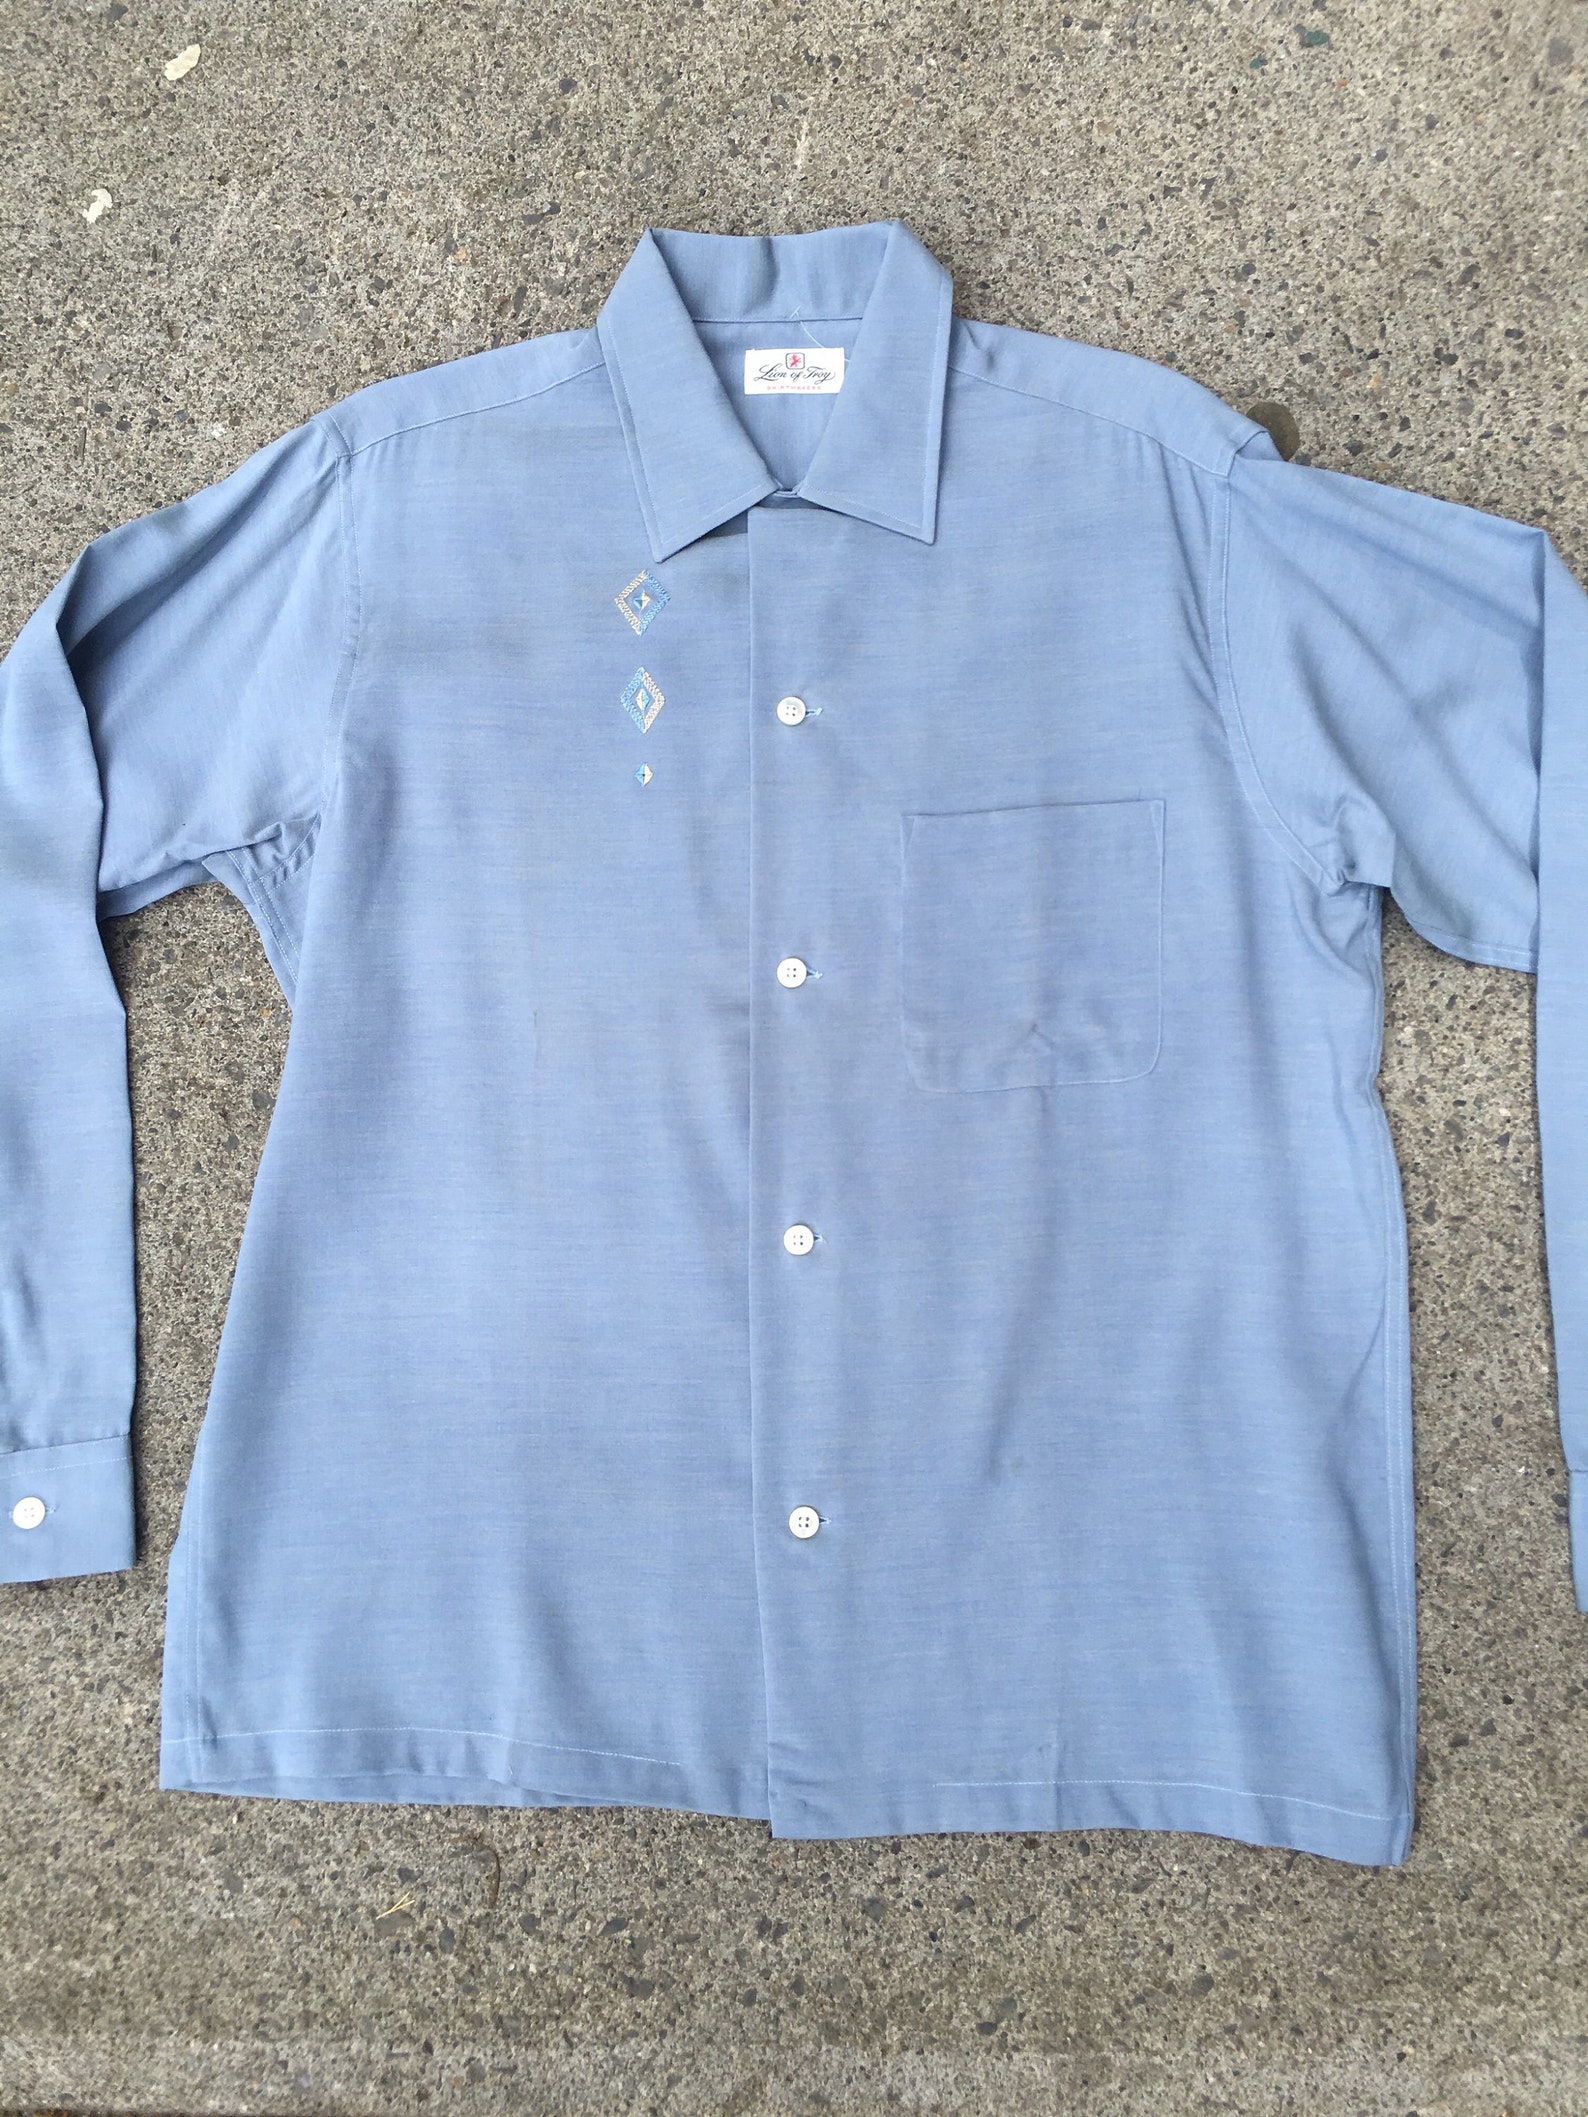 1950s NOS Blue Lion of Troy Shirt Size Medium | Etsy